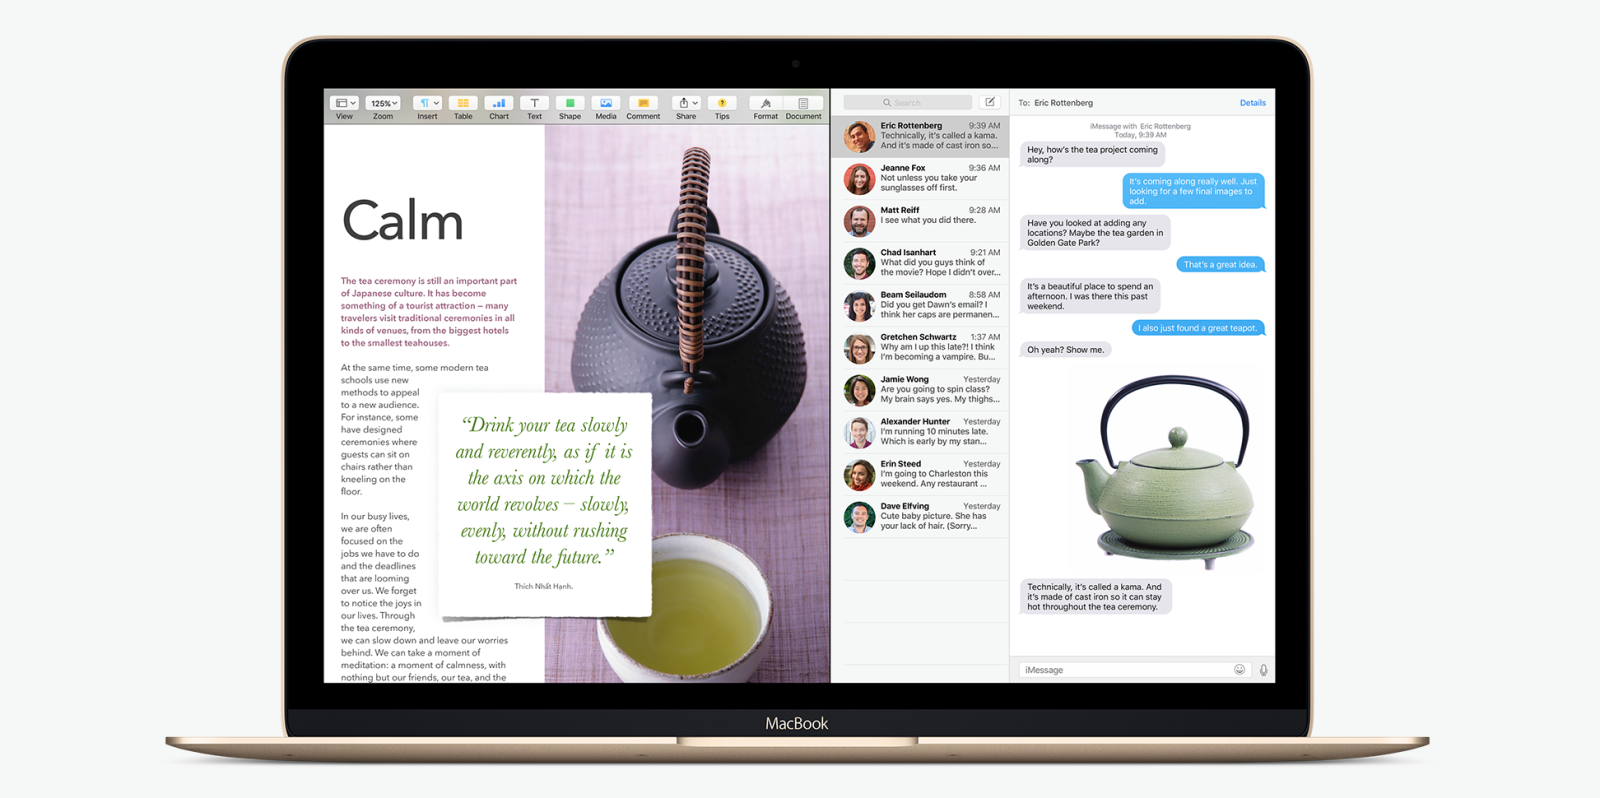 Download Keynote For Mac Os X 10.11.6